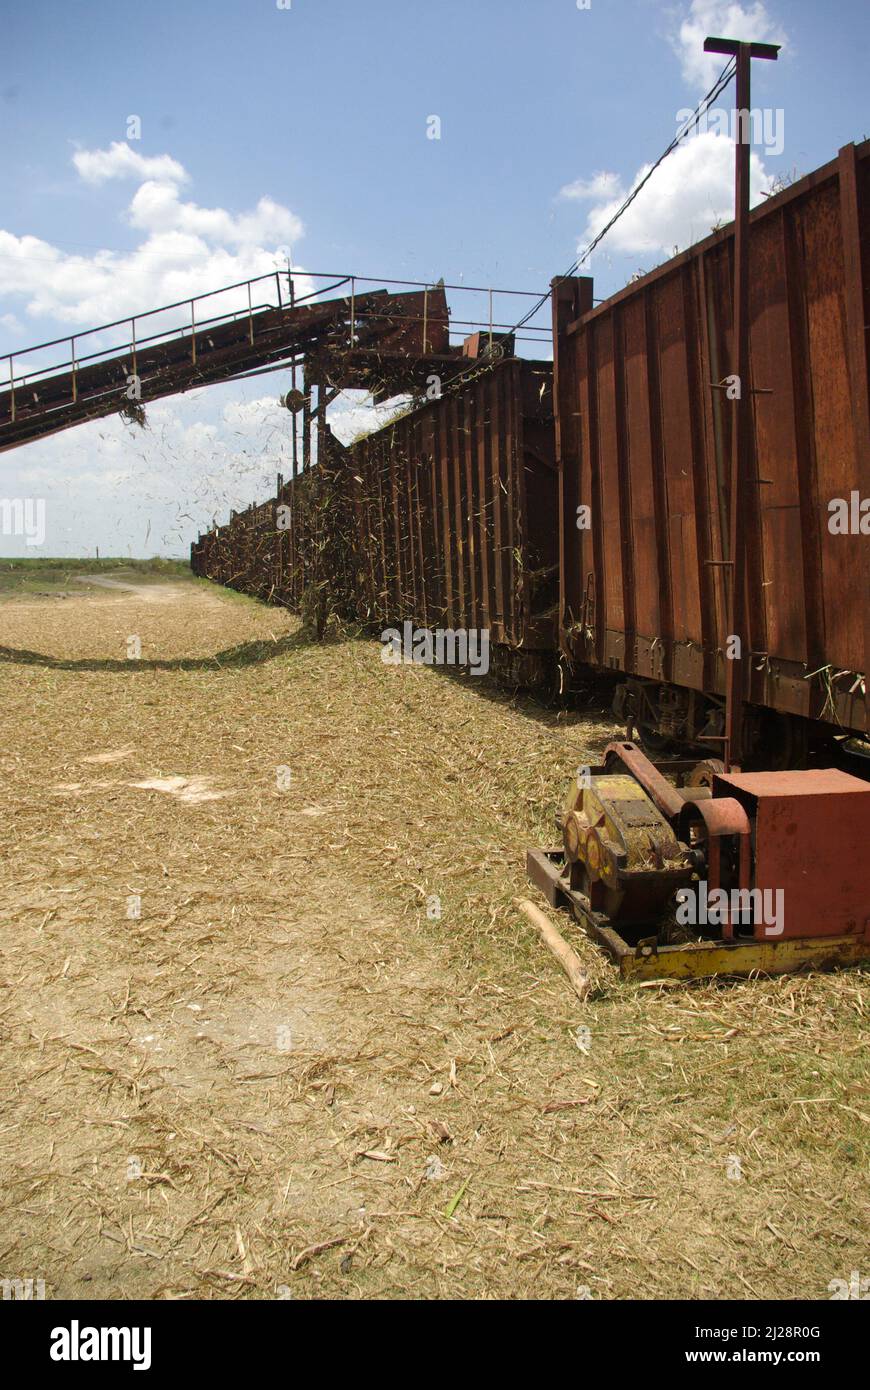 Chambas, Cuba, April 25, 2010. Loading sugar cane into train carriages. Stock Photo